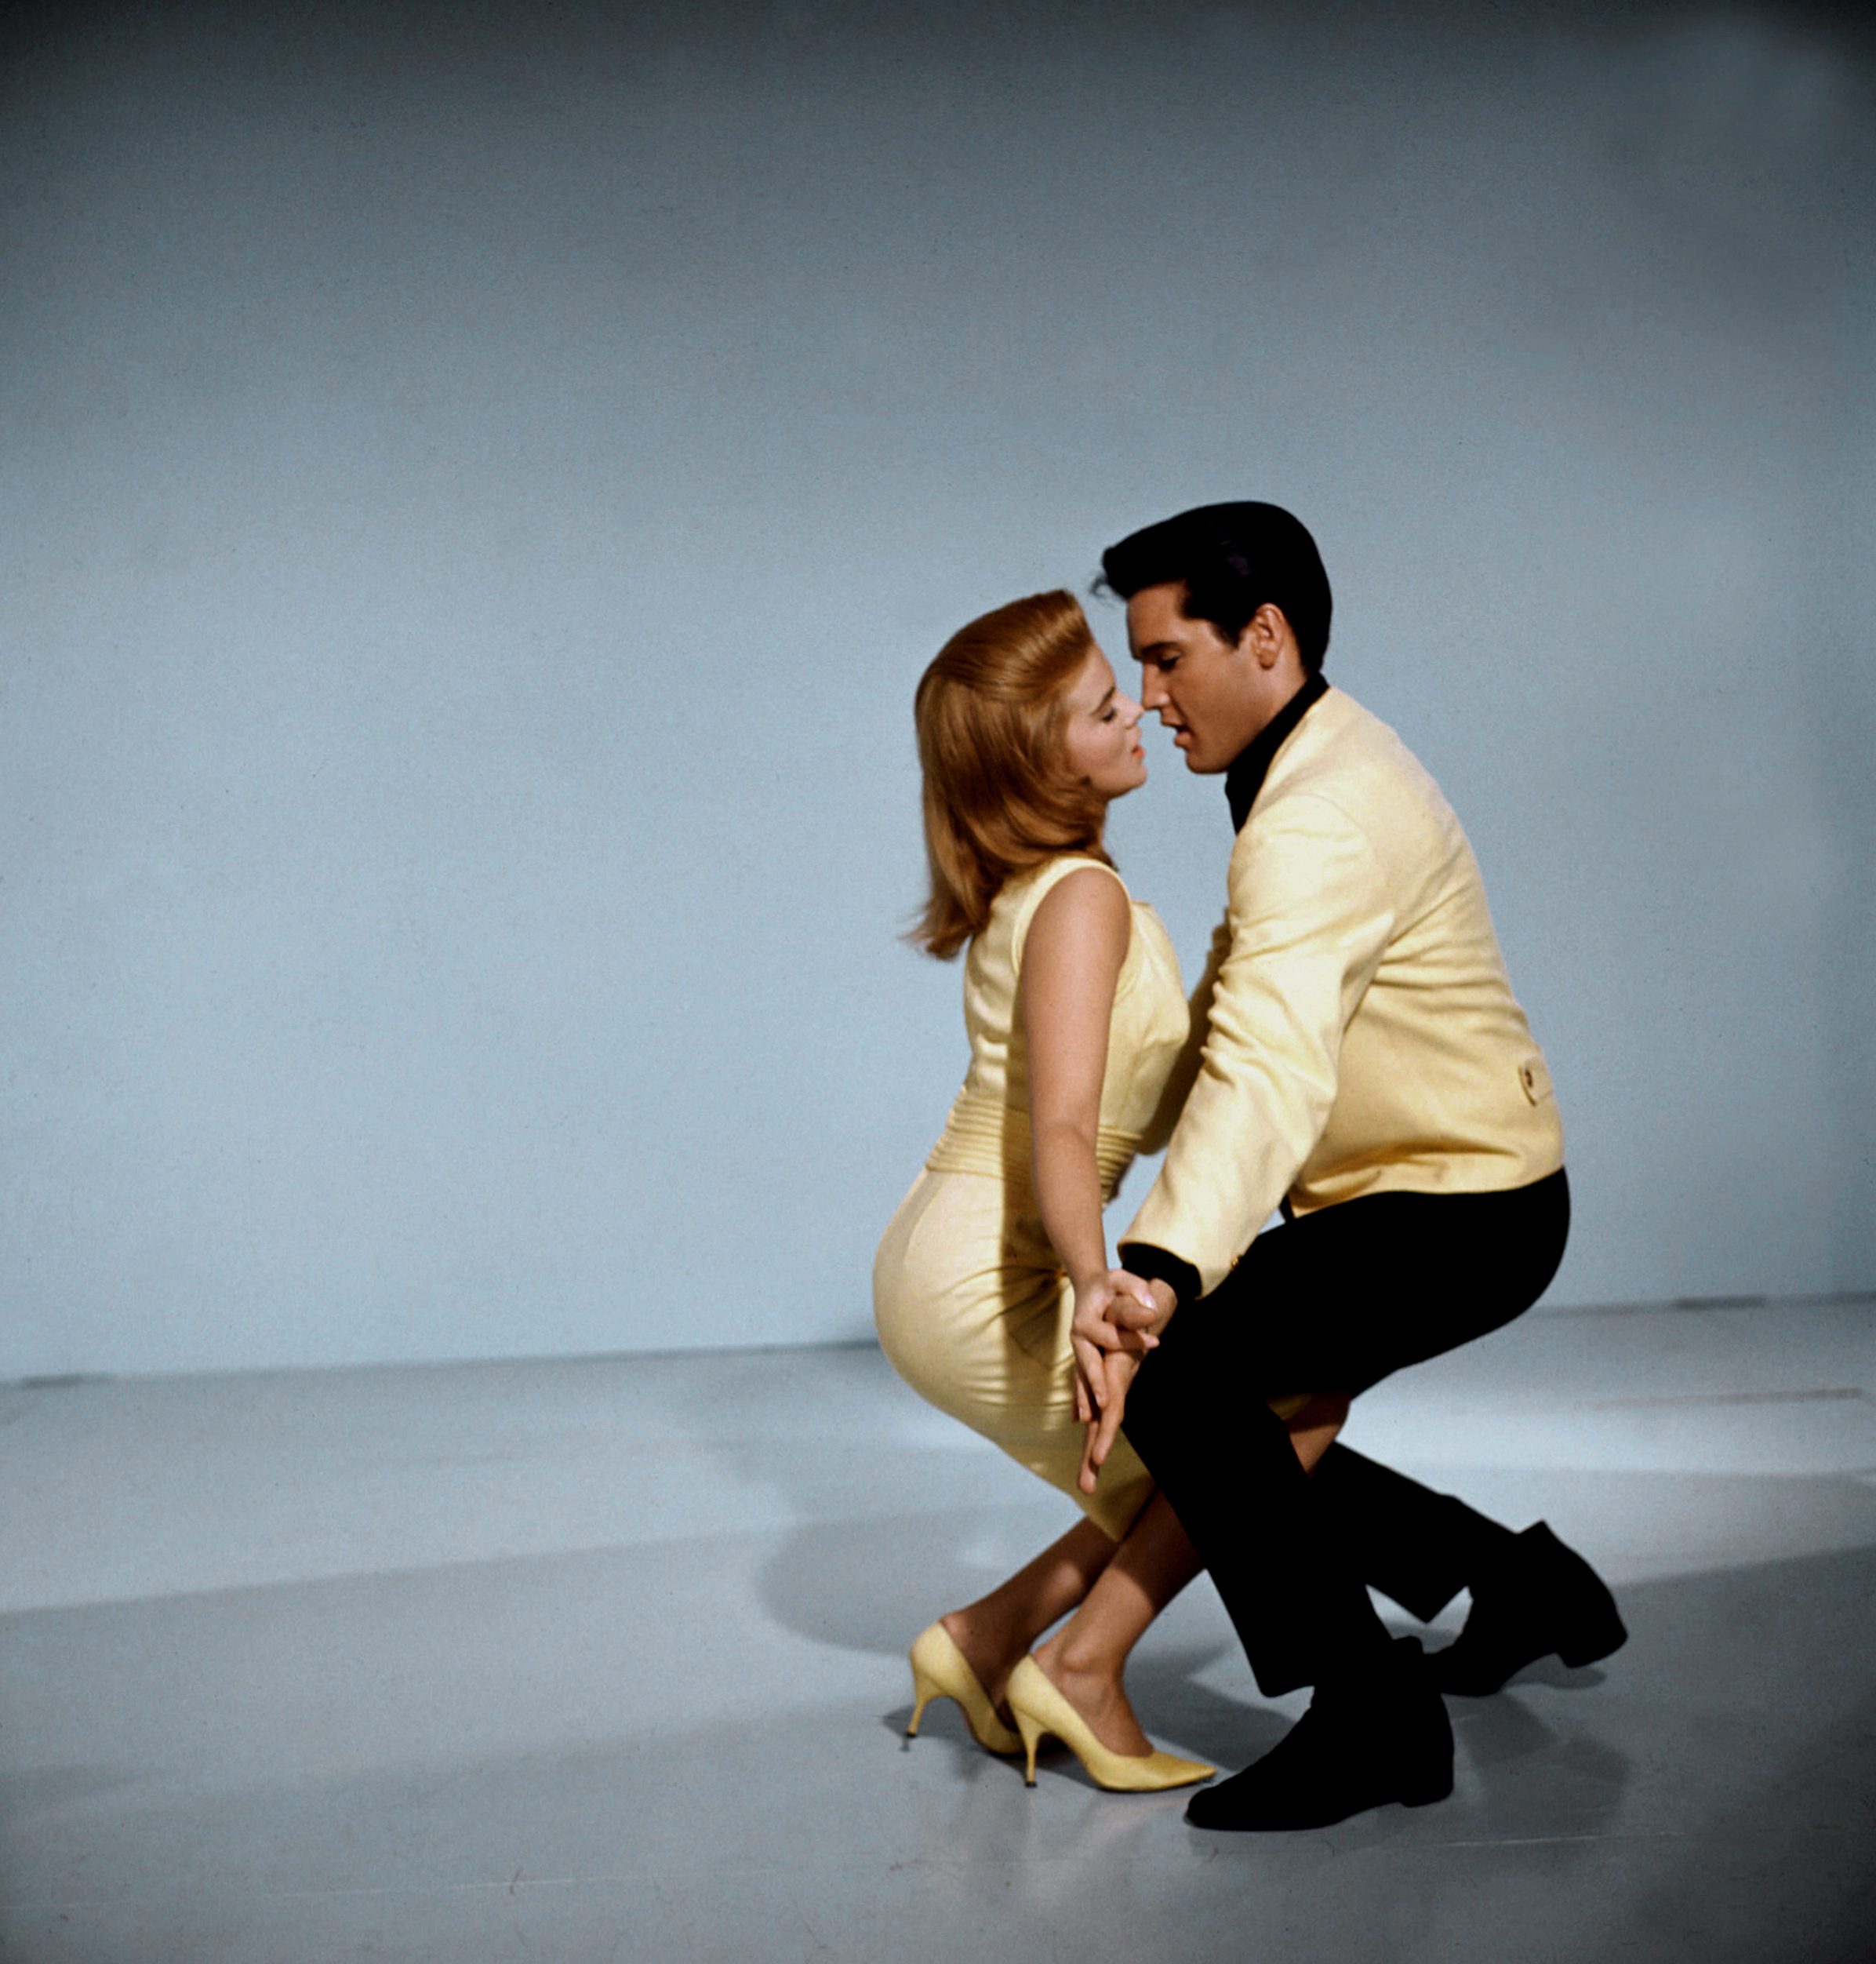 Swedish-American actress, singer and dancer Ann-Margret and Elvis promoting the movie "Viva Las Vegas", 1964.